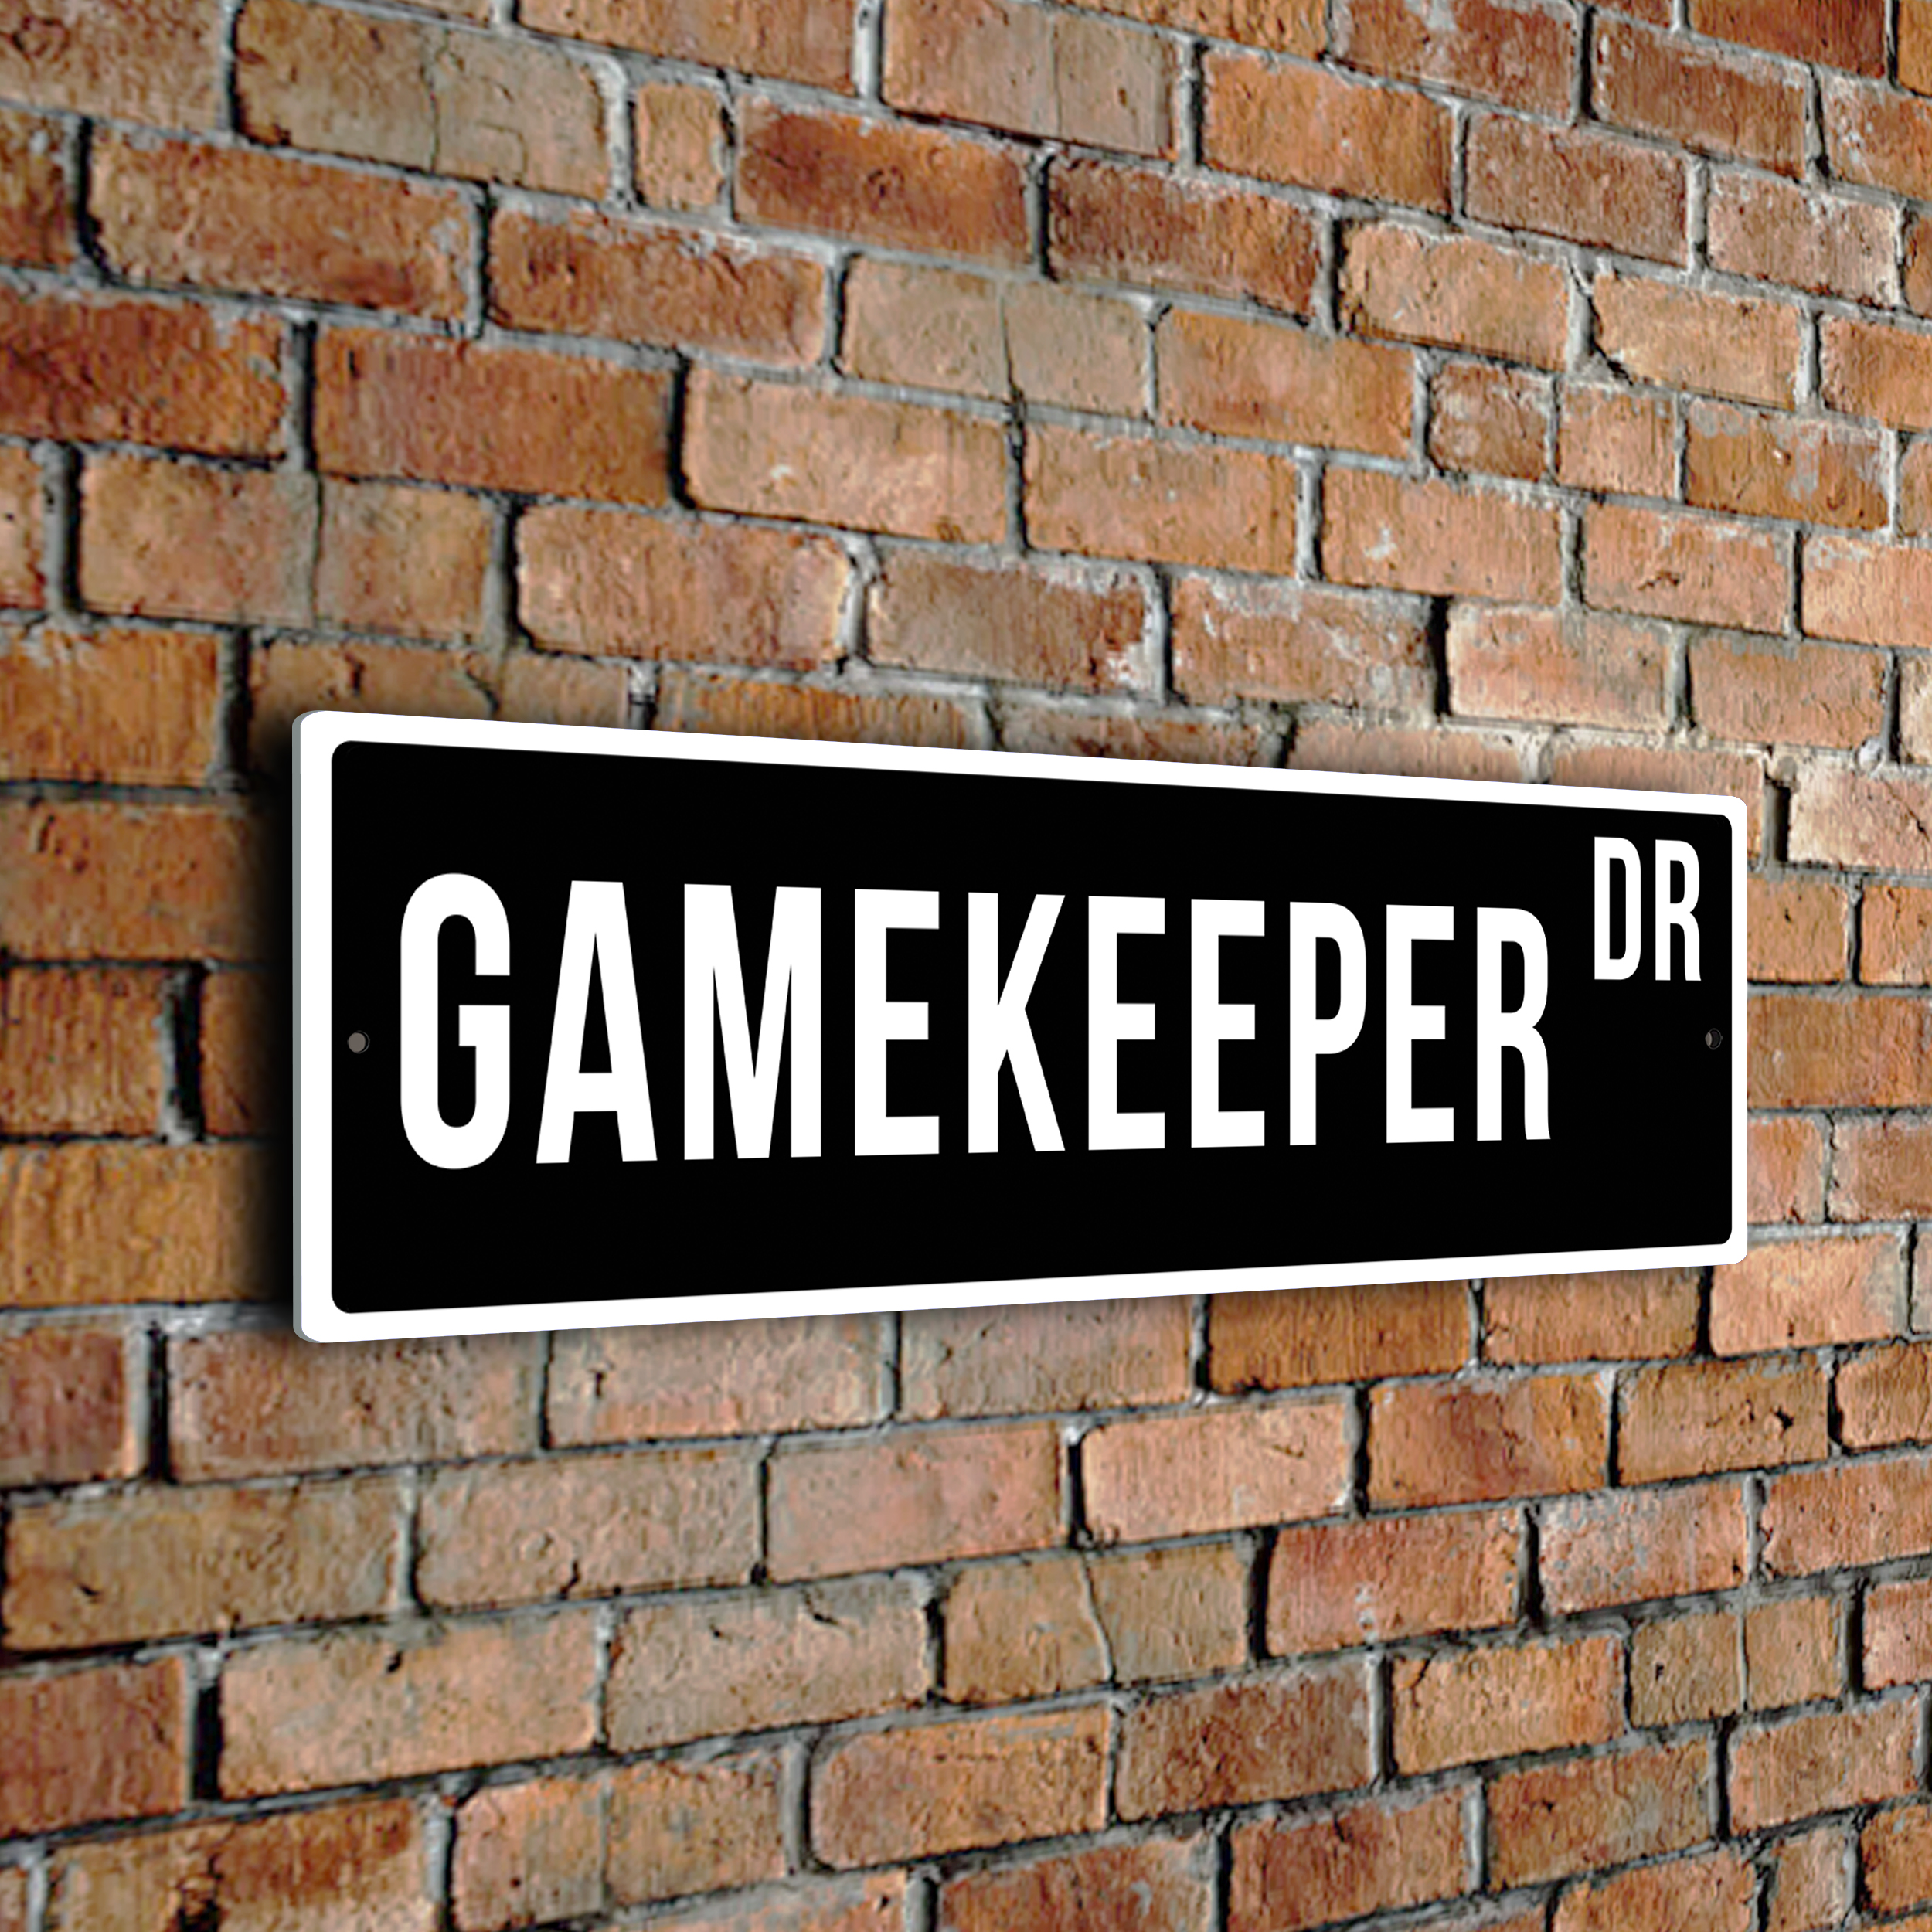 Gamekeeper street sign